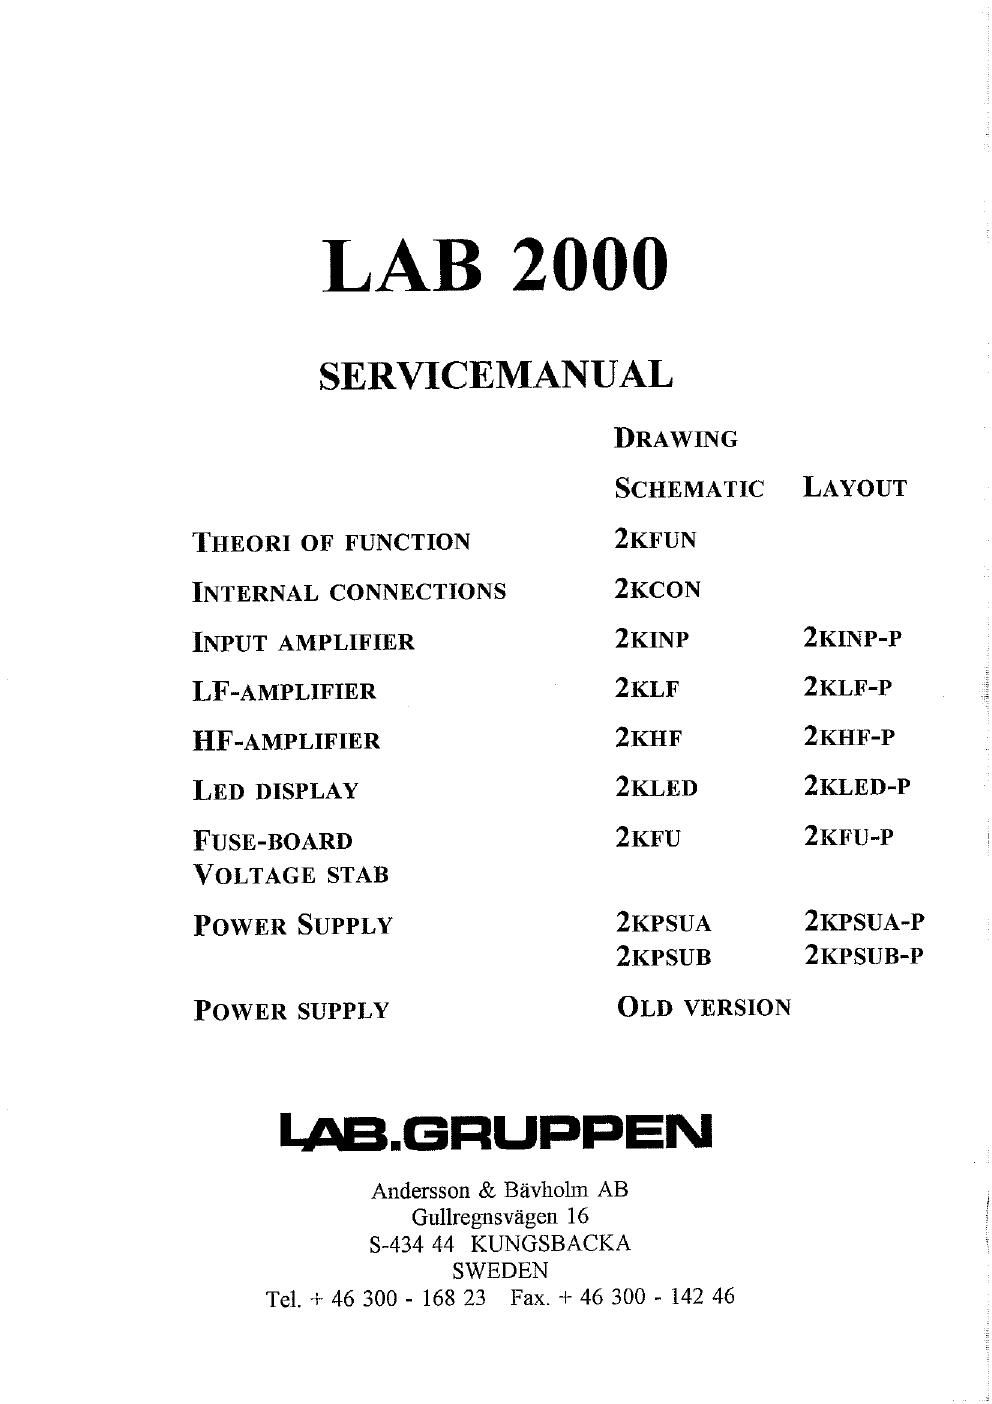 labgruppen lab 2000 service manual